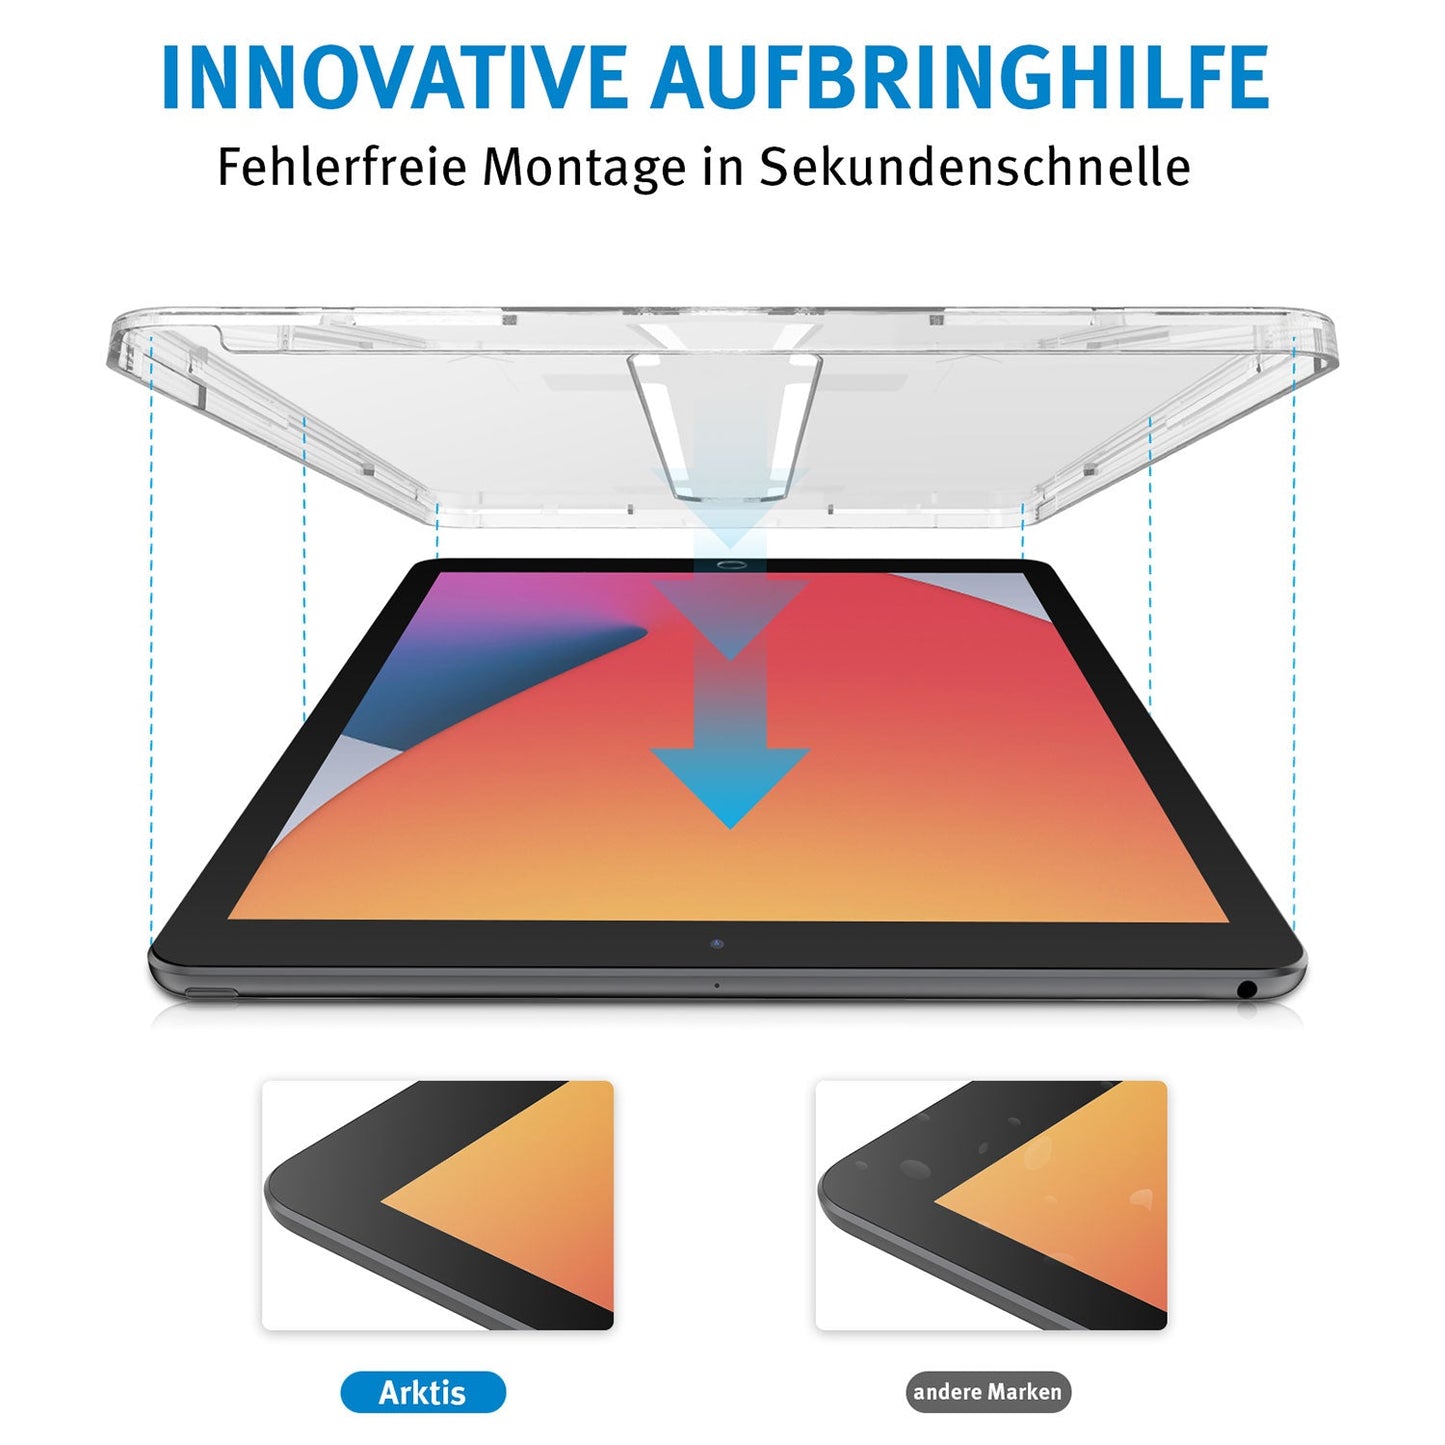 ArktisPRO iPad Air 10,5“ - iPad Pro 10,5" GLAS PRO Displayschutz